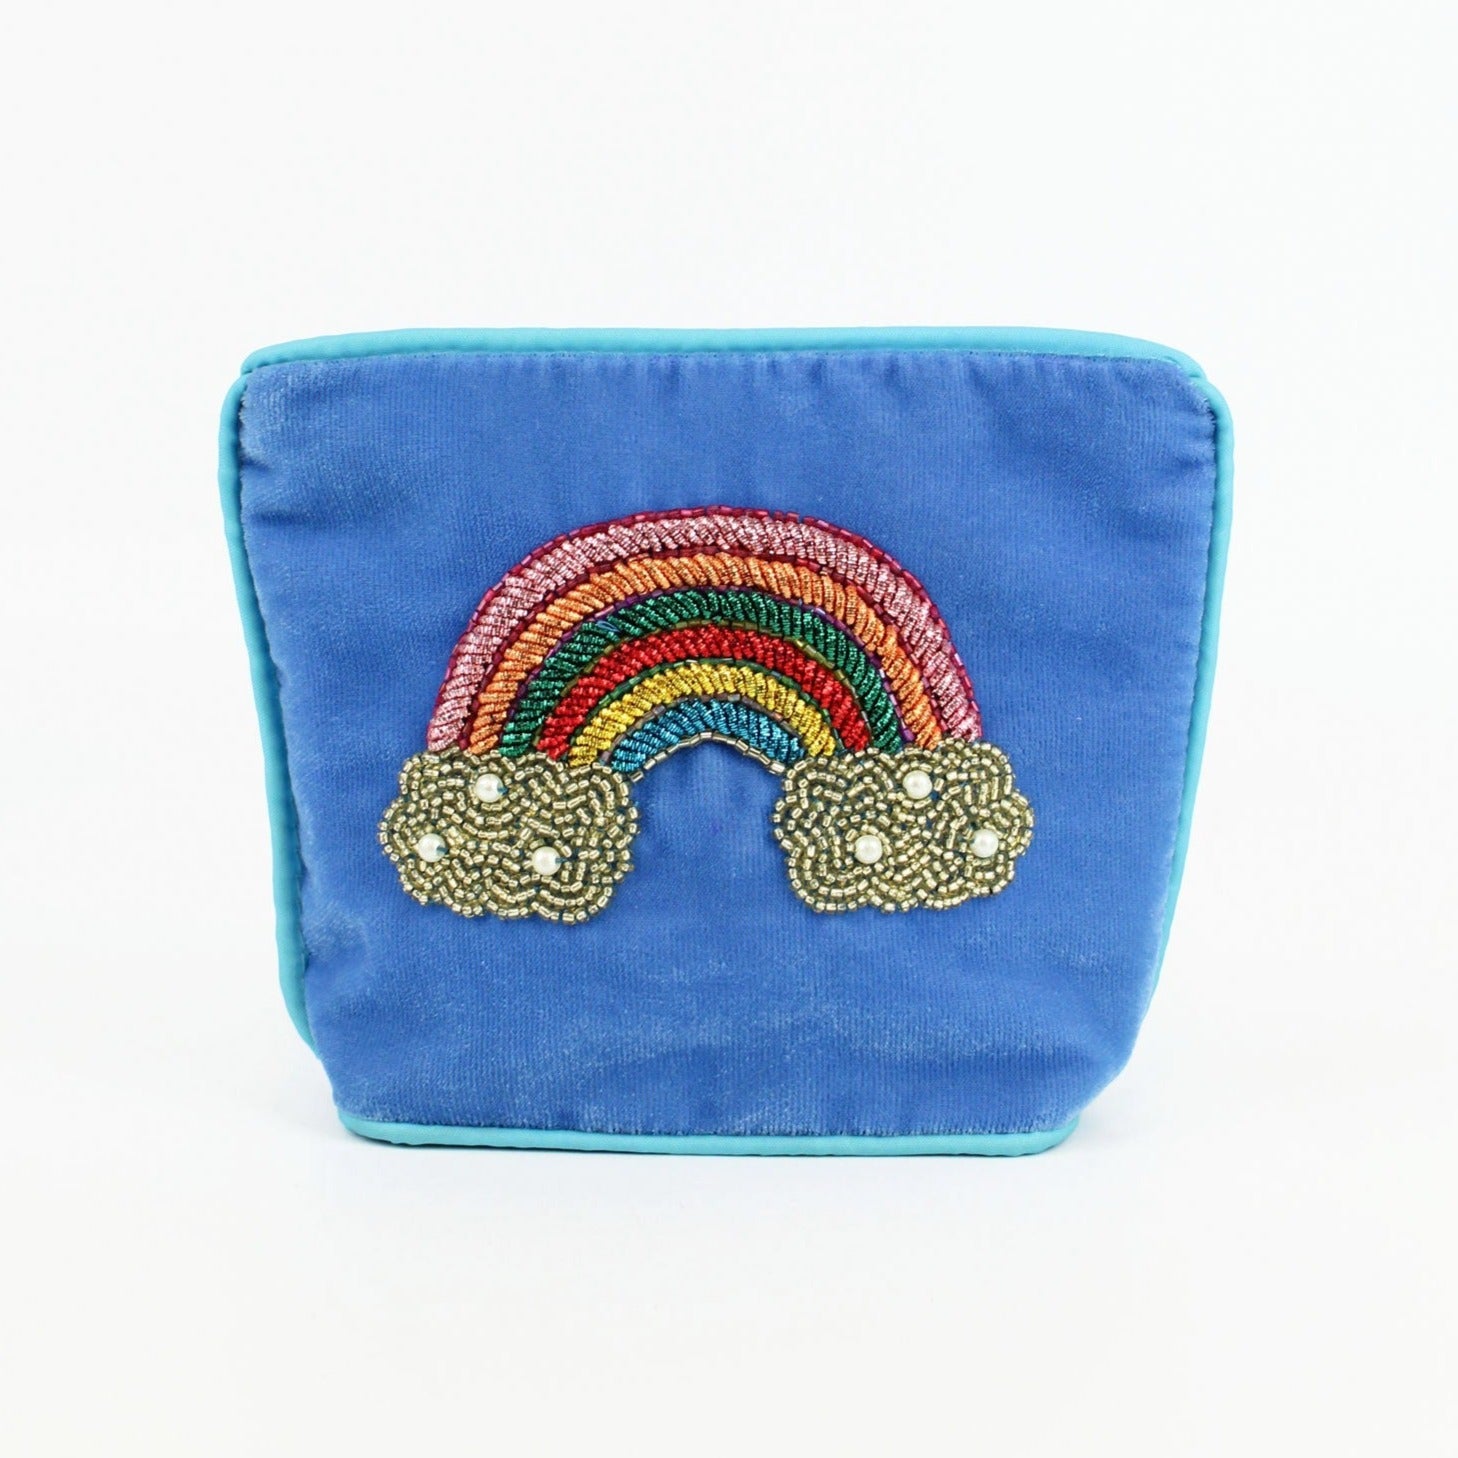 blue velvet purse with beaded raibow motif and zip closure